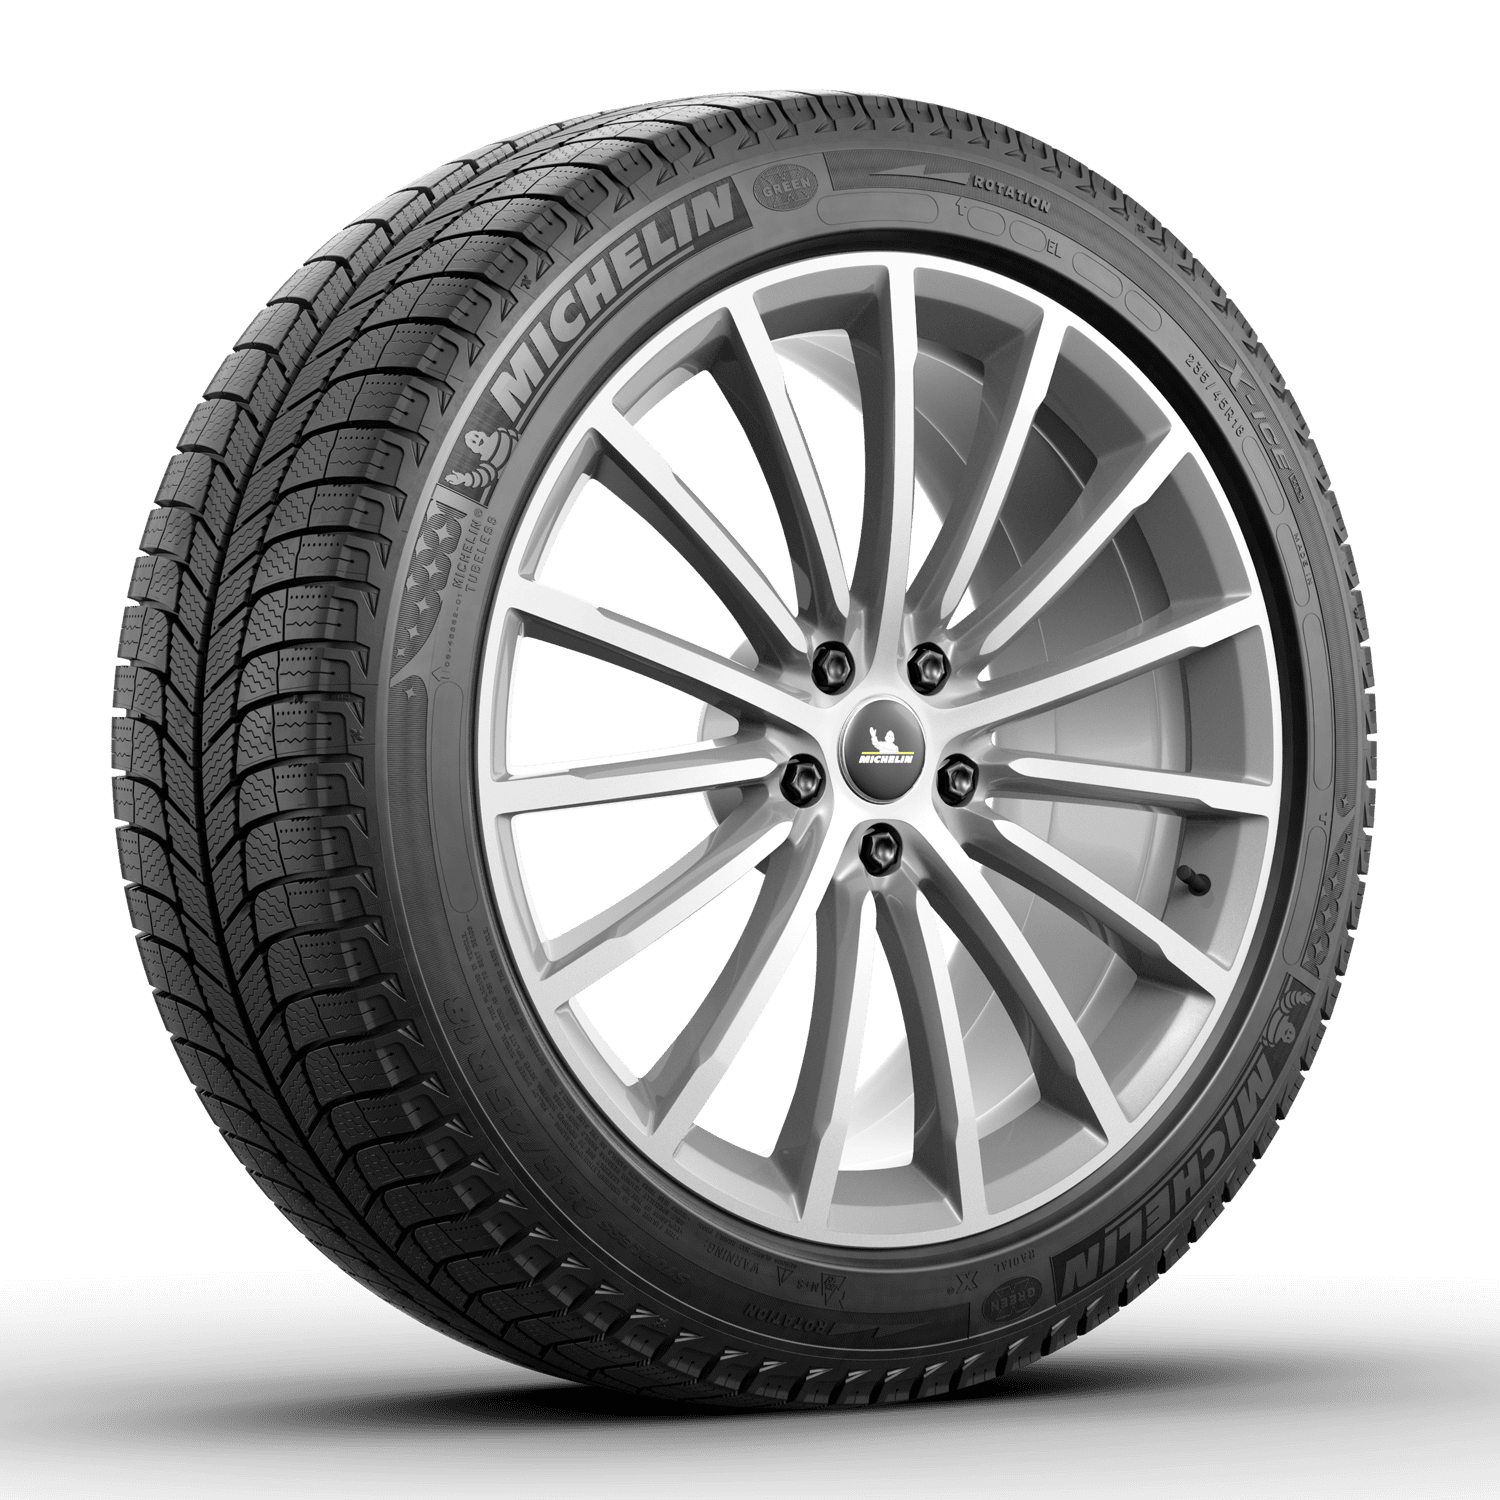 Michelin X-Ice Xi3 Winter 175/65R15 88T XL Passenger Tire